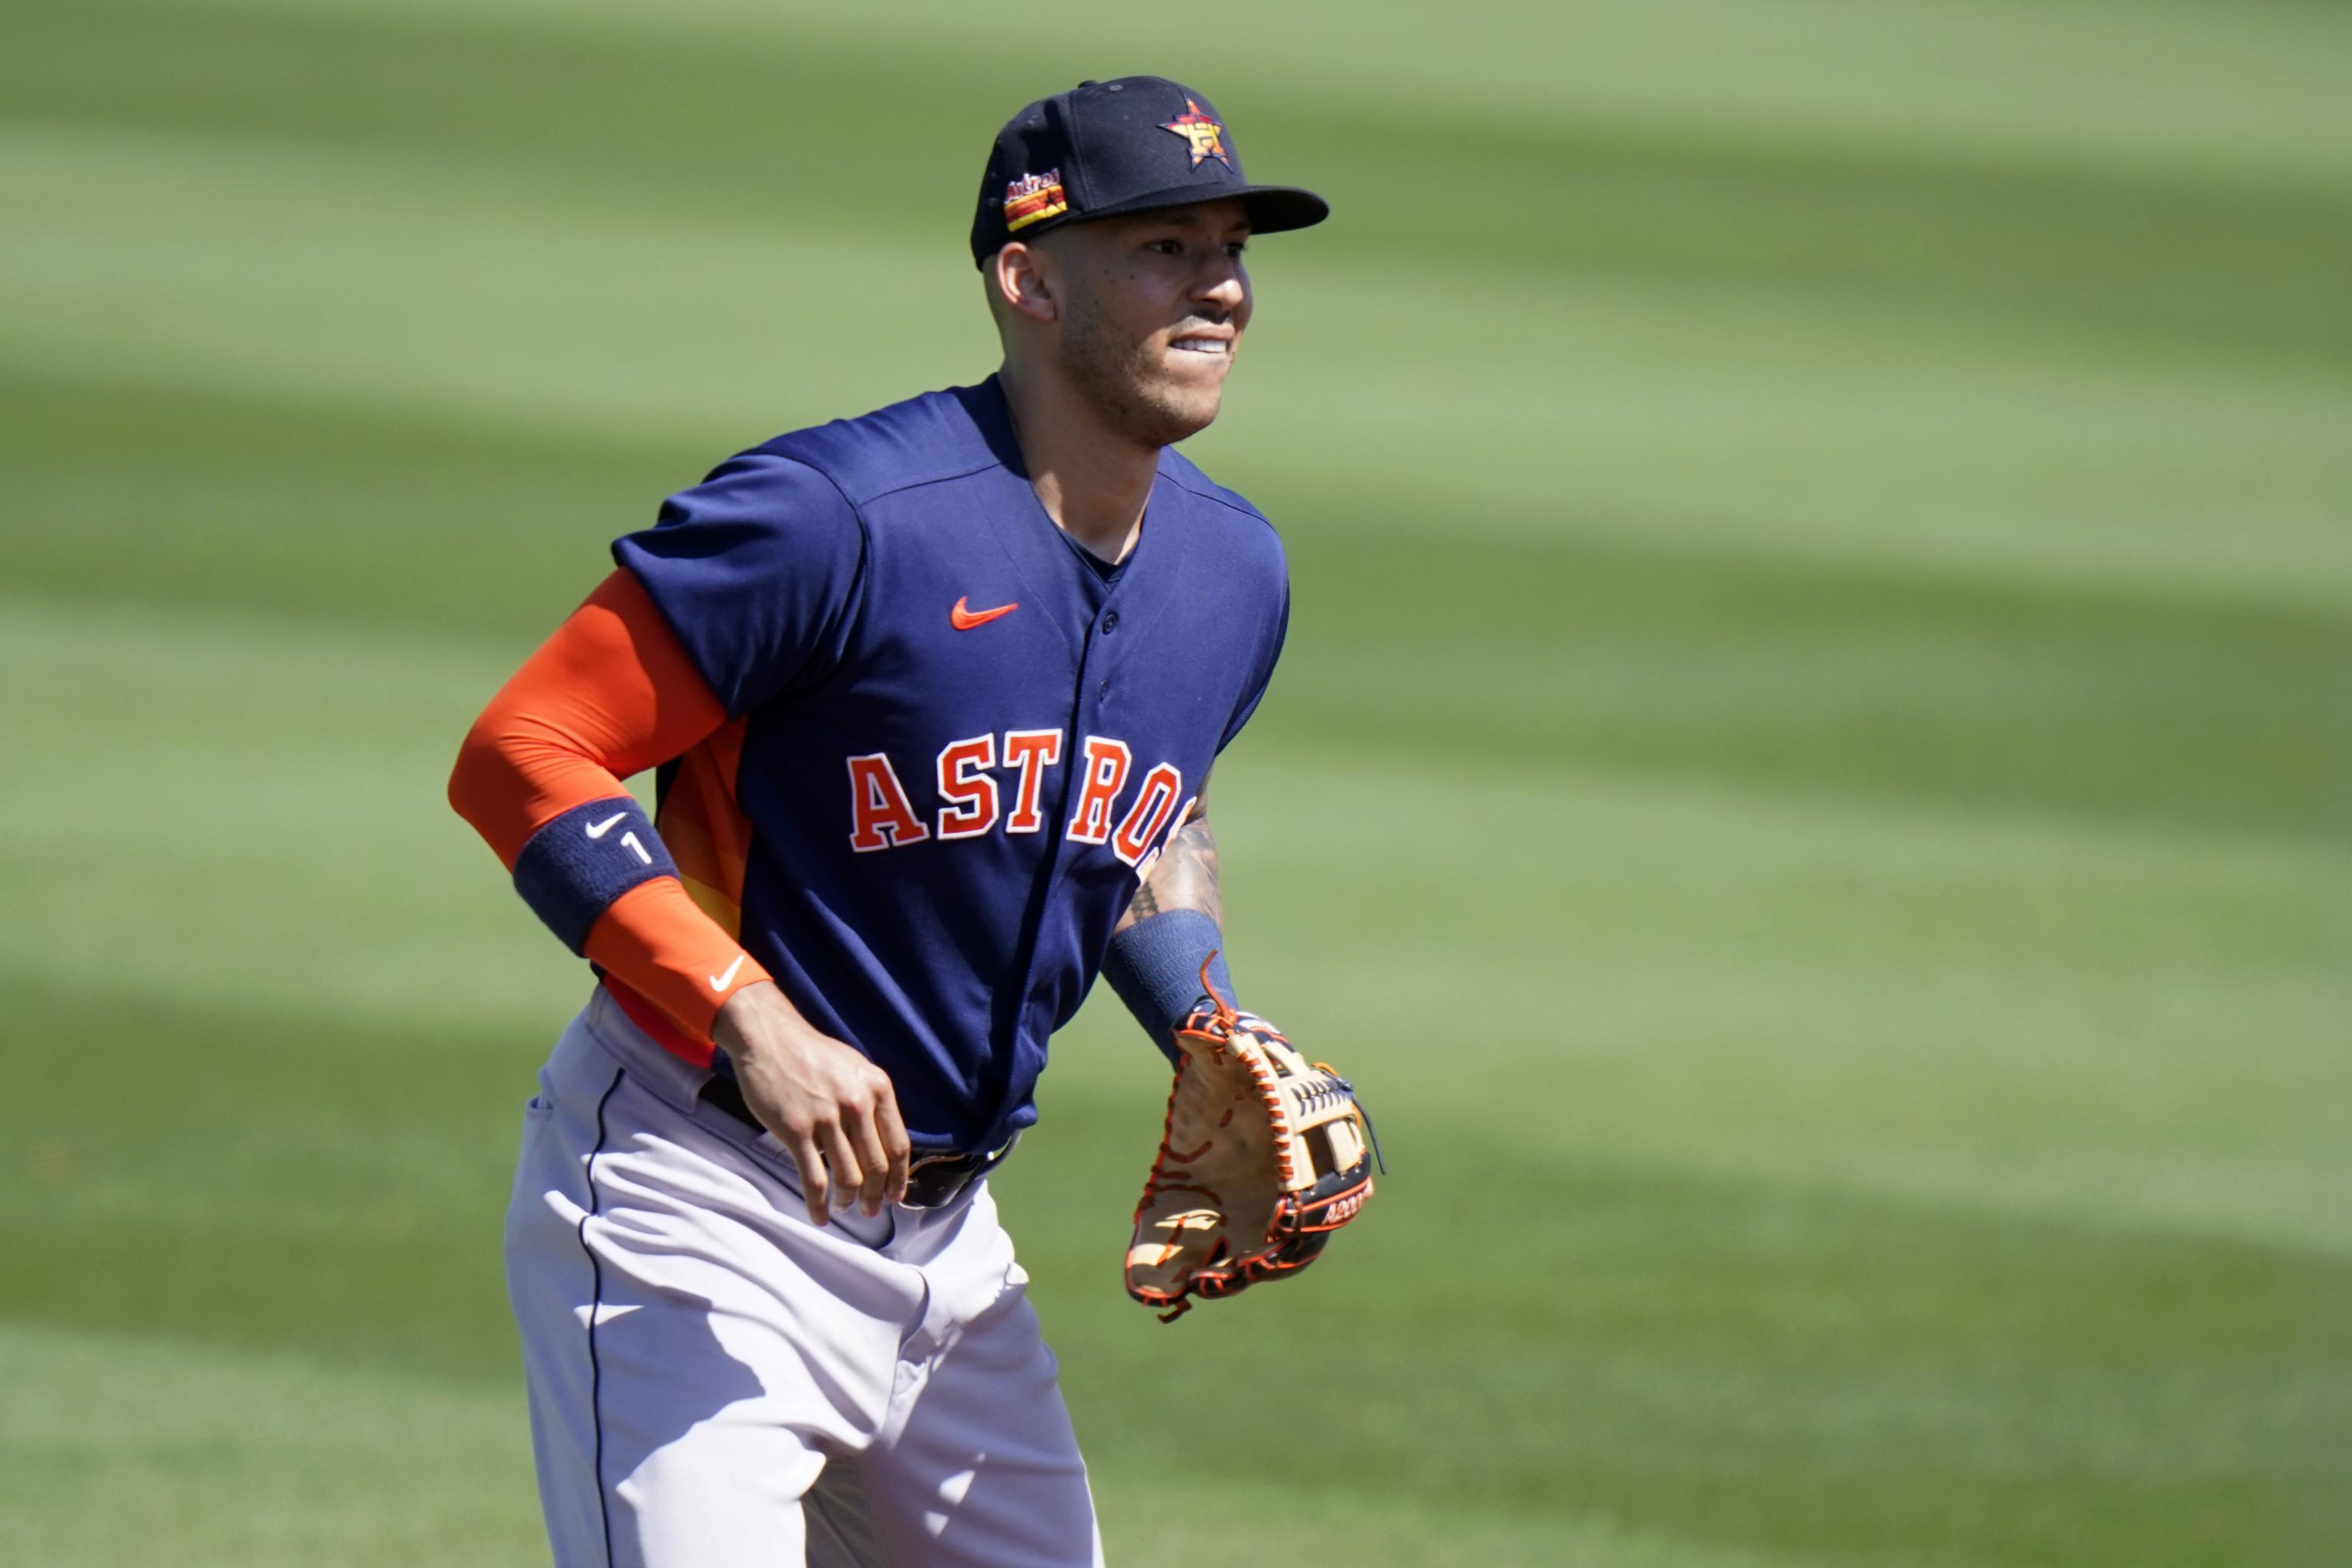 Houston Astros shortstop Correa completes stint with Hooks